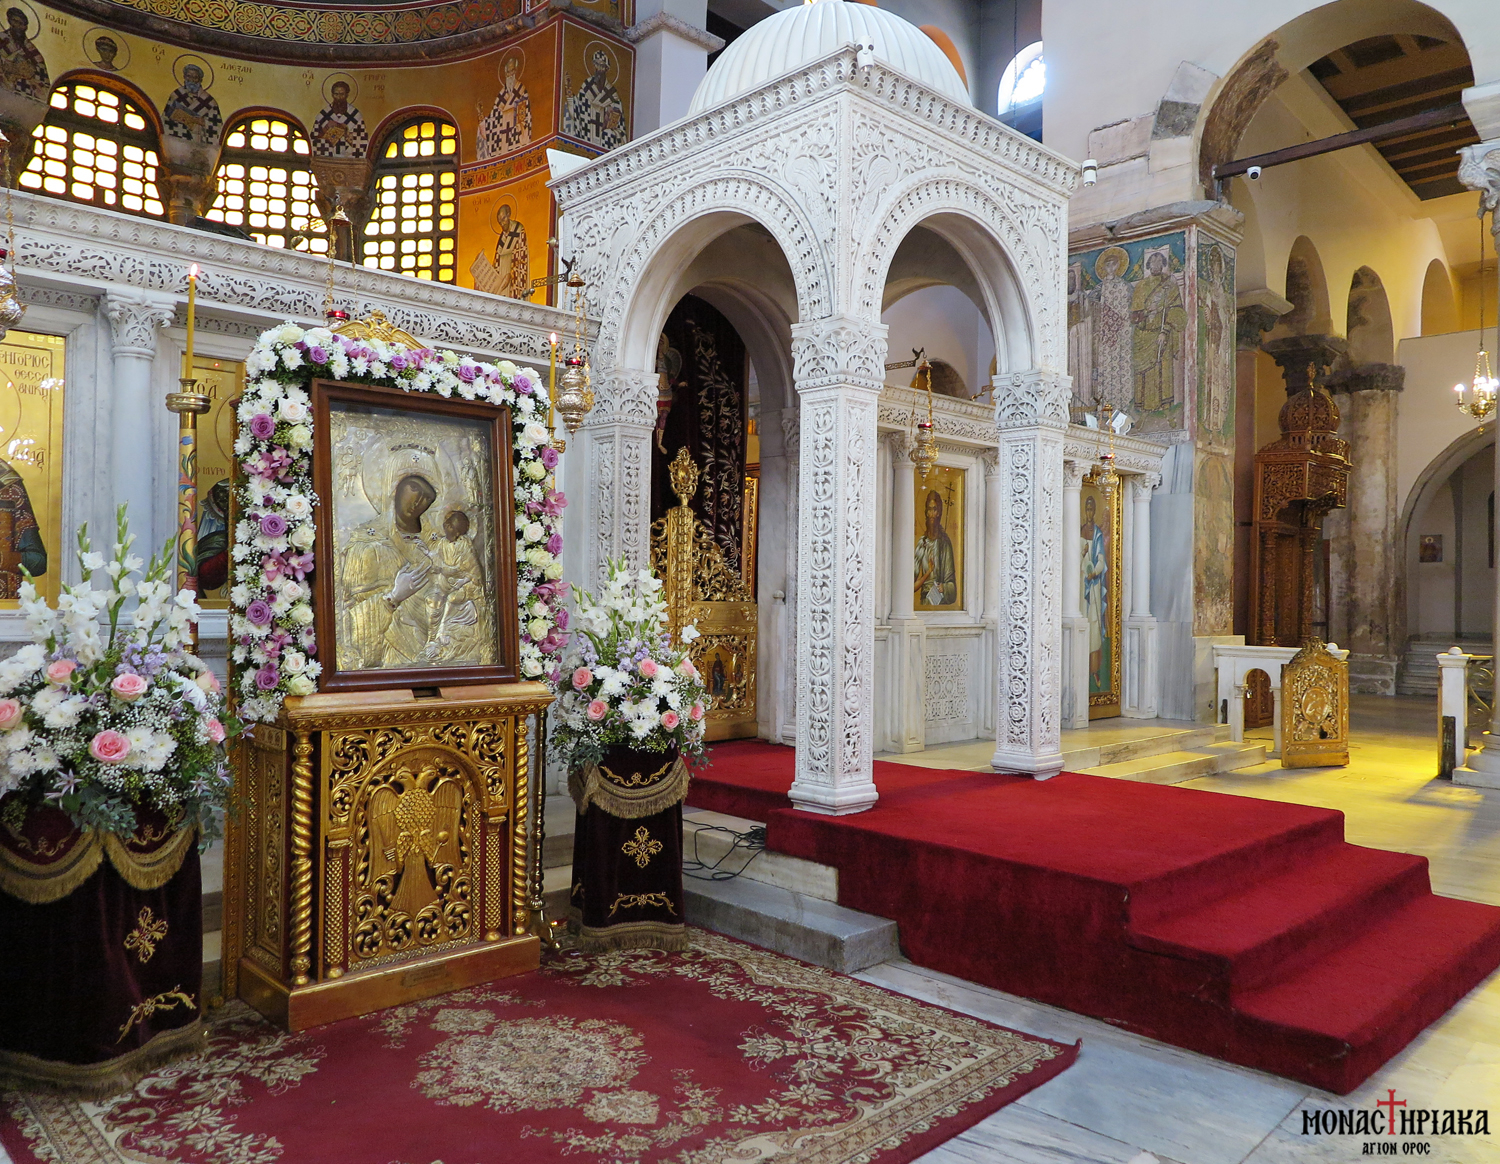 Holy Church of Saint Demetrios in Thessaloniki